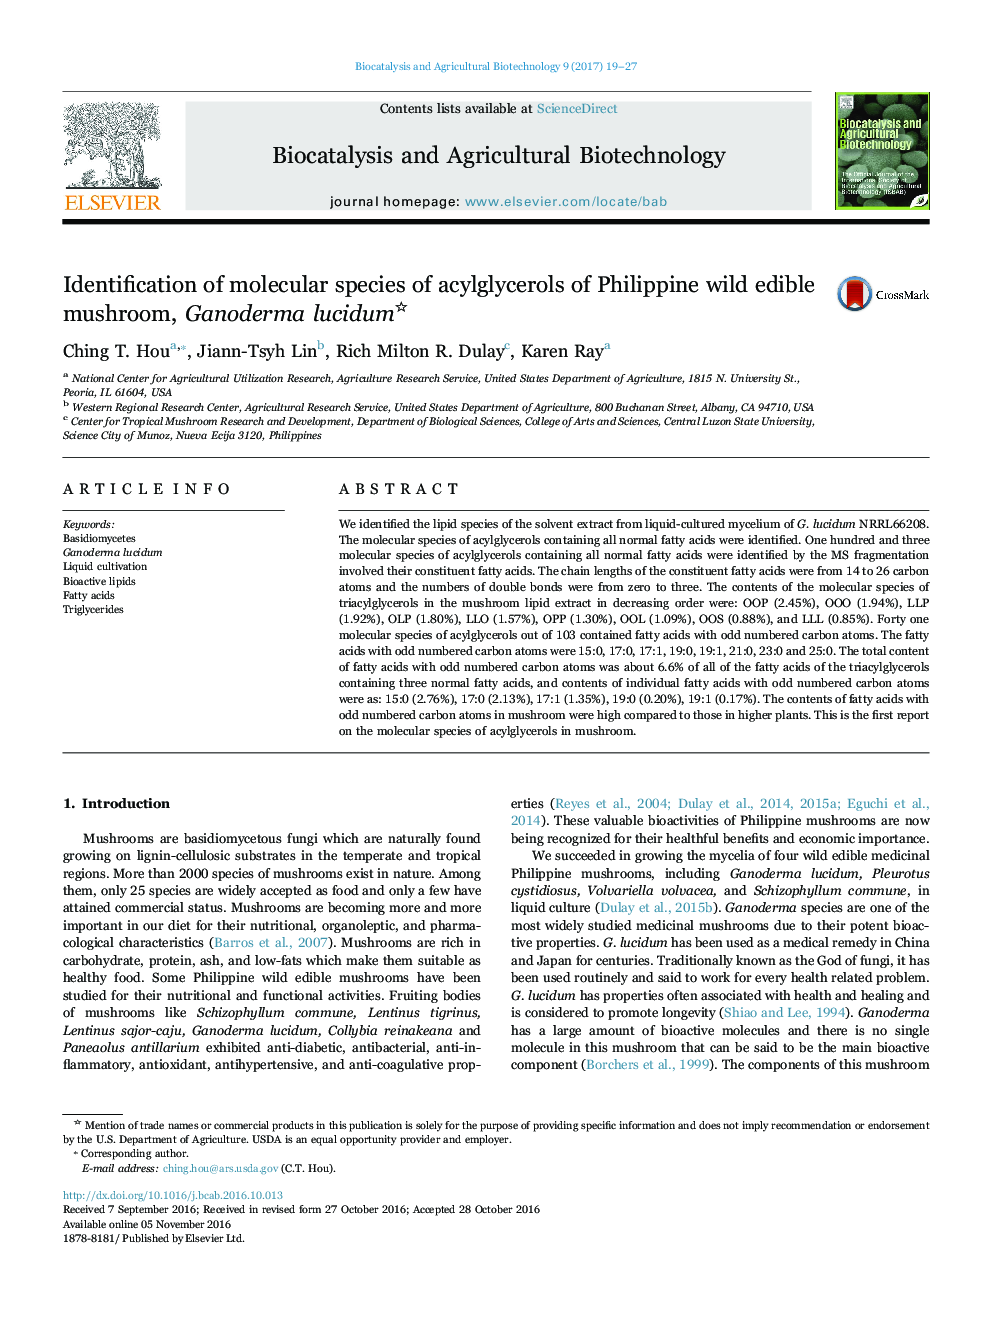 Identification of molecular species of acylglycerols of Philippine wild edible mushroom, Ganoderma lucidum